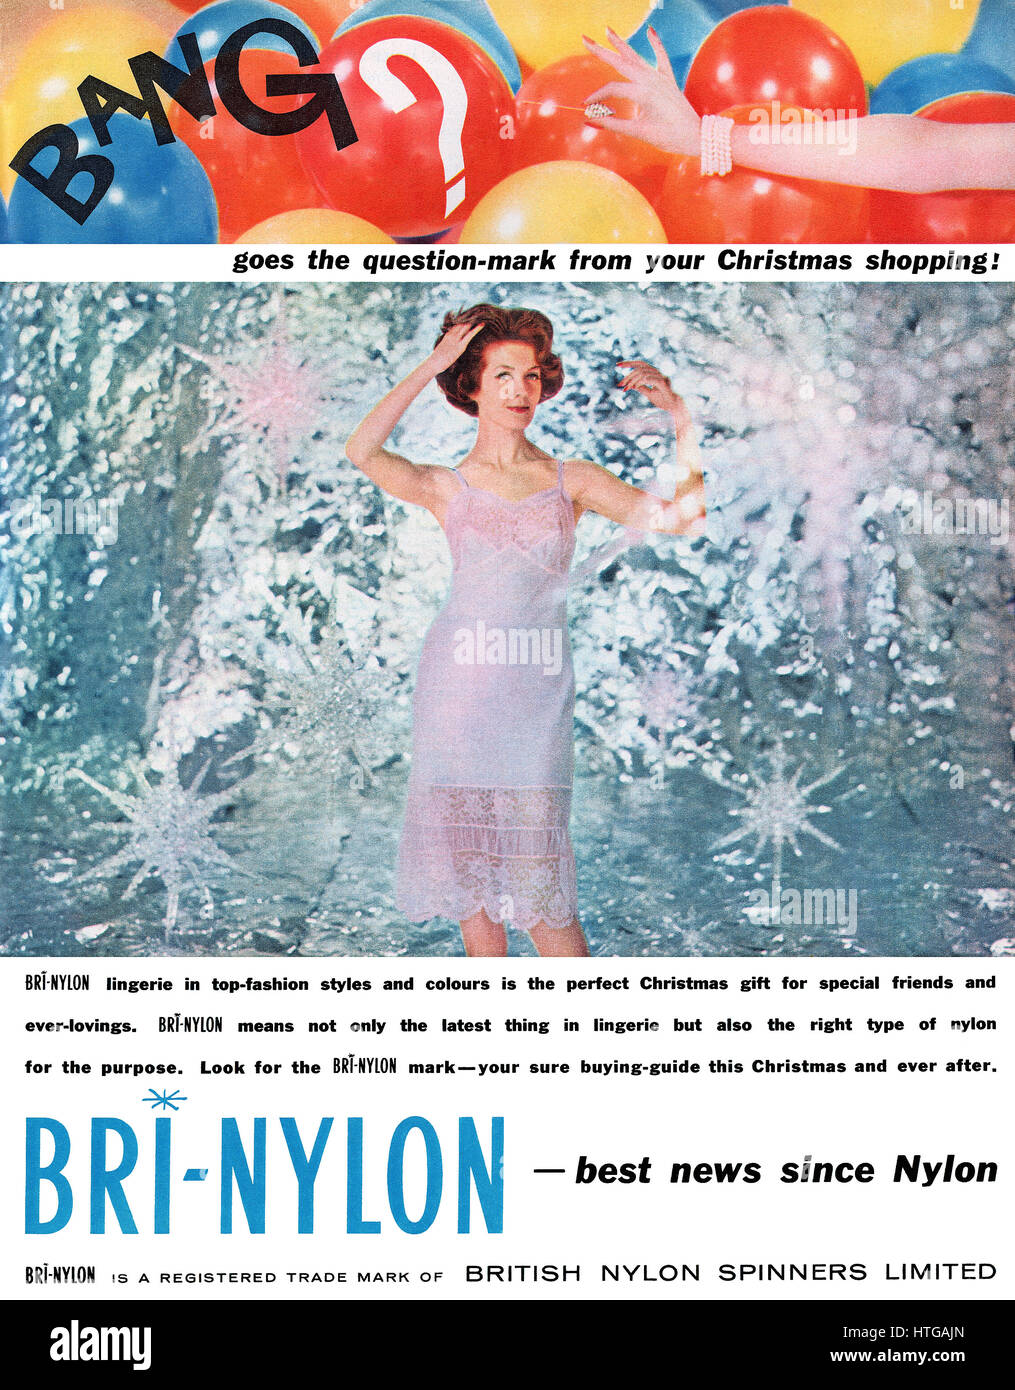 1959 British Christmas advertisement for Bri-Nylon from British Nylon Spinners Limited. Stock Photo